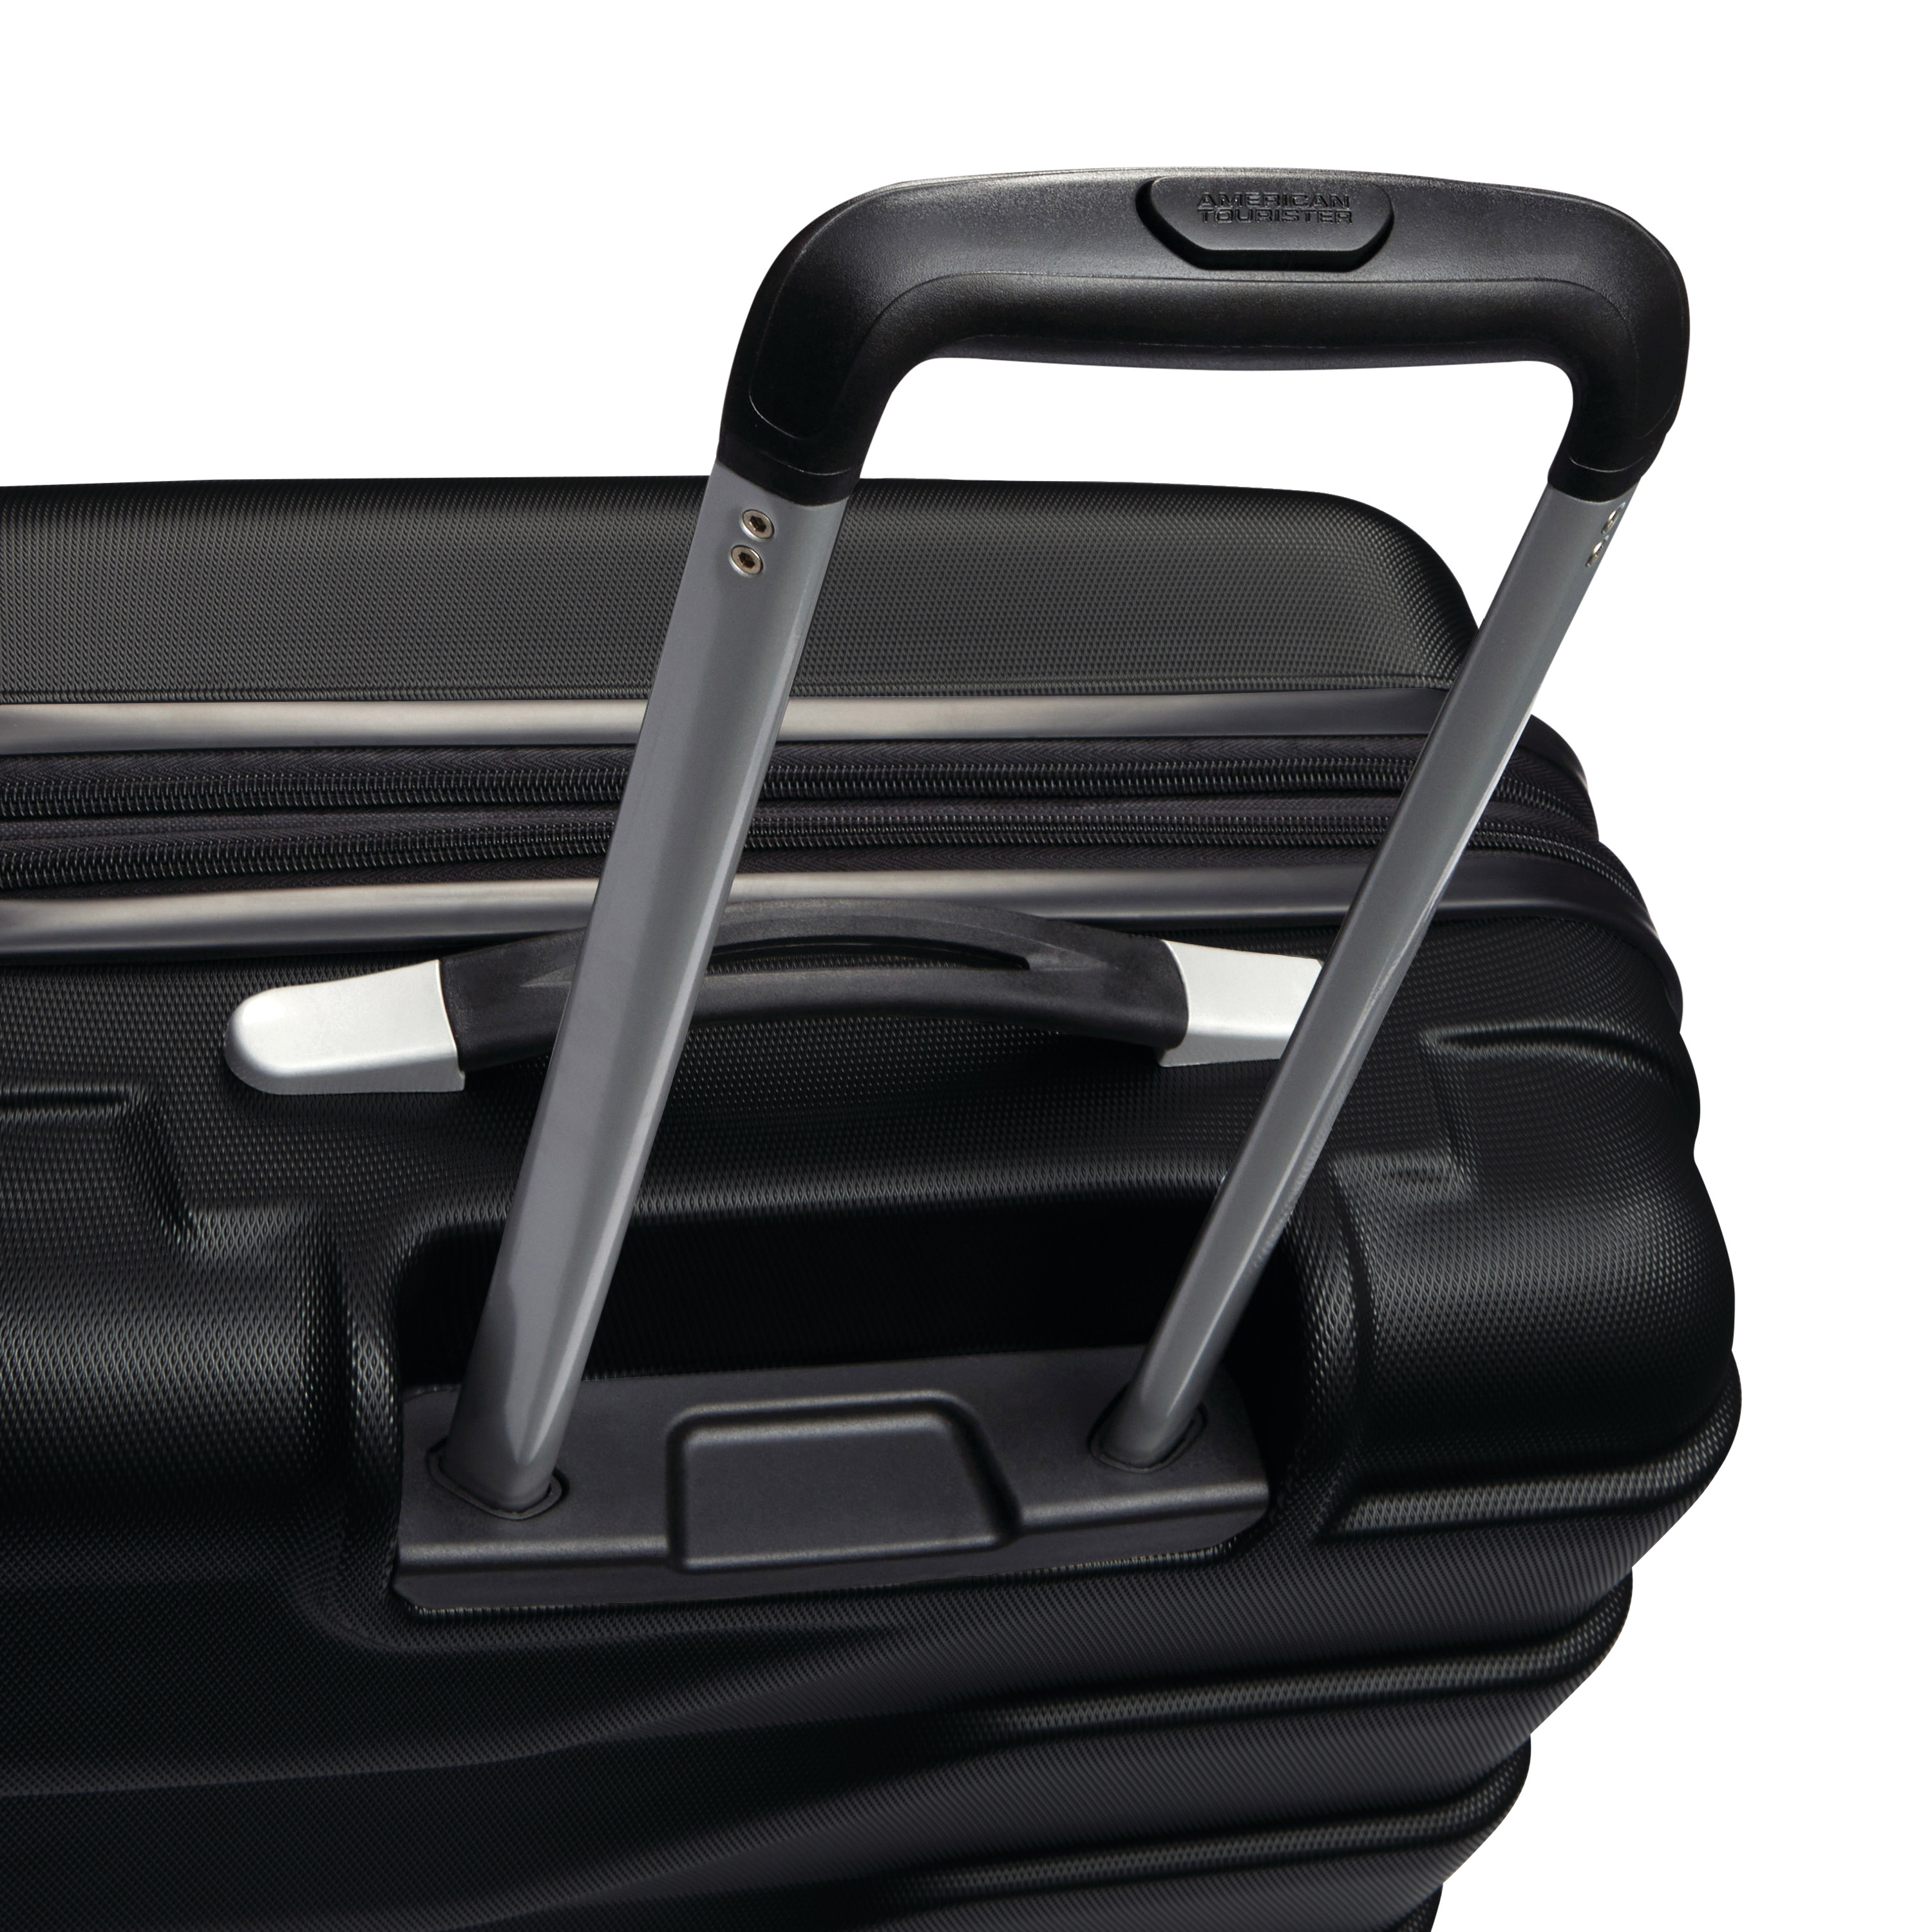 American Tourister 3 Piece Set - Luggage